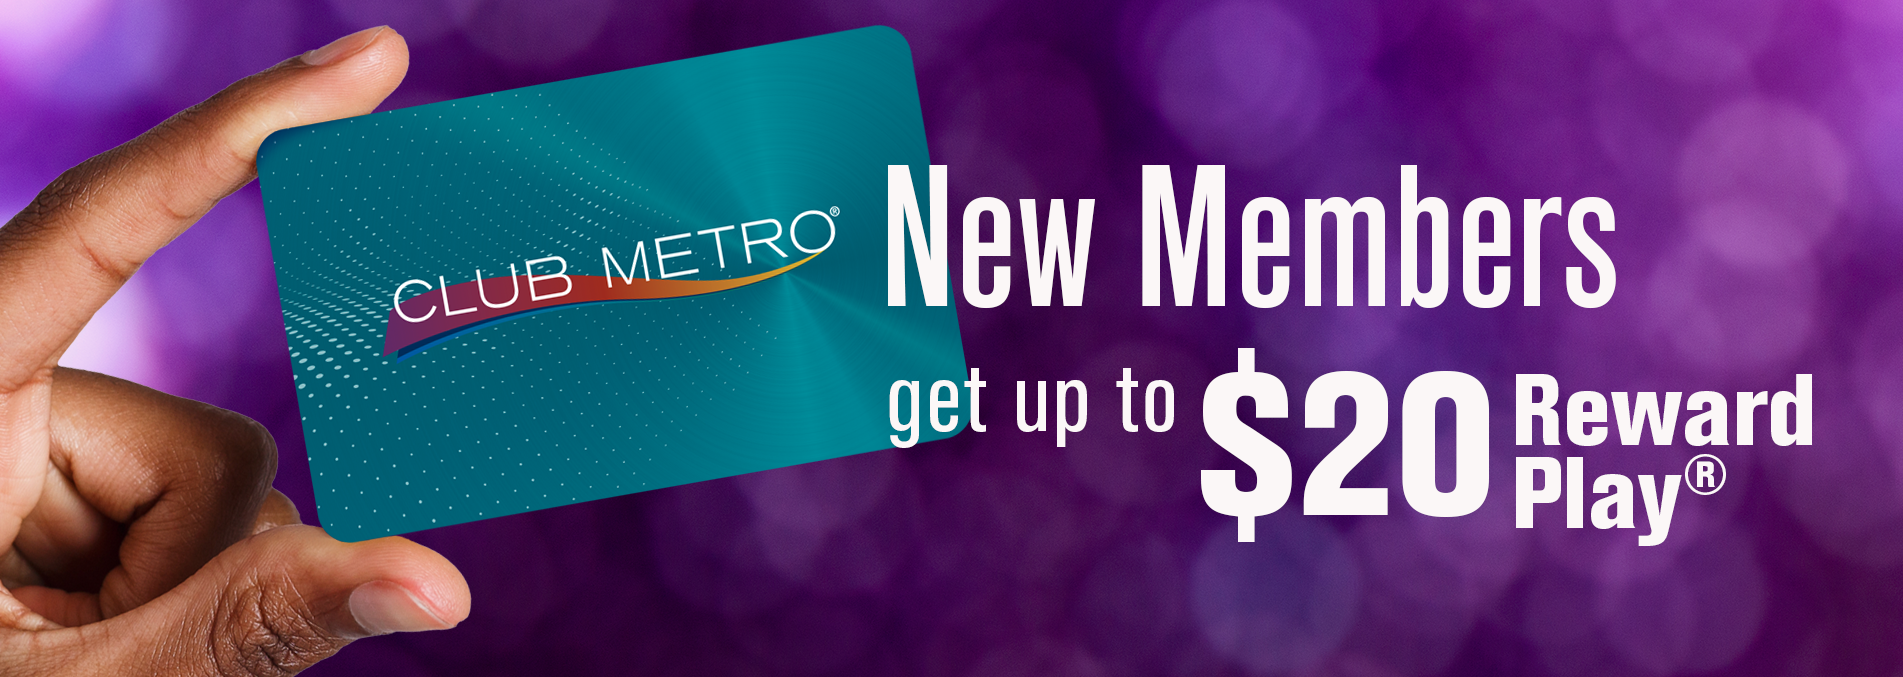 motor city casino club metro login